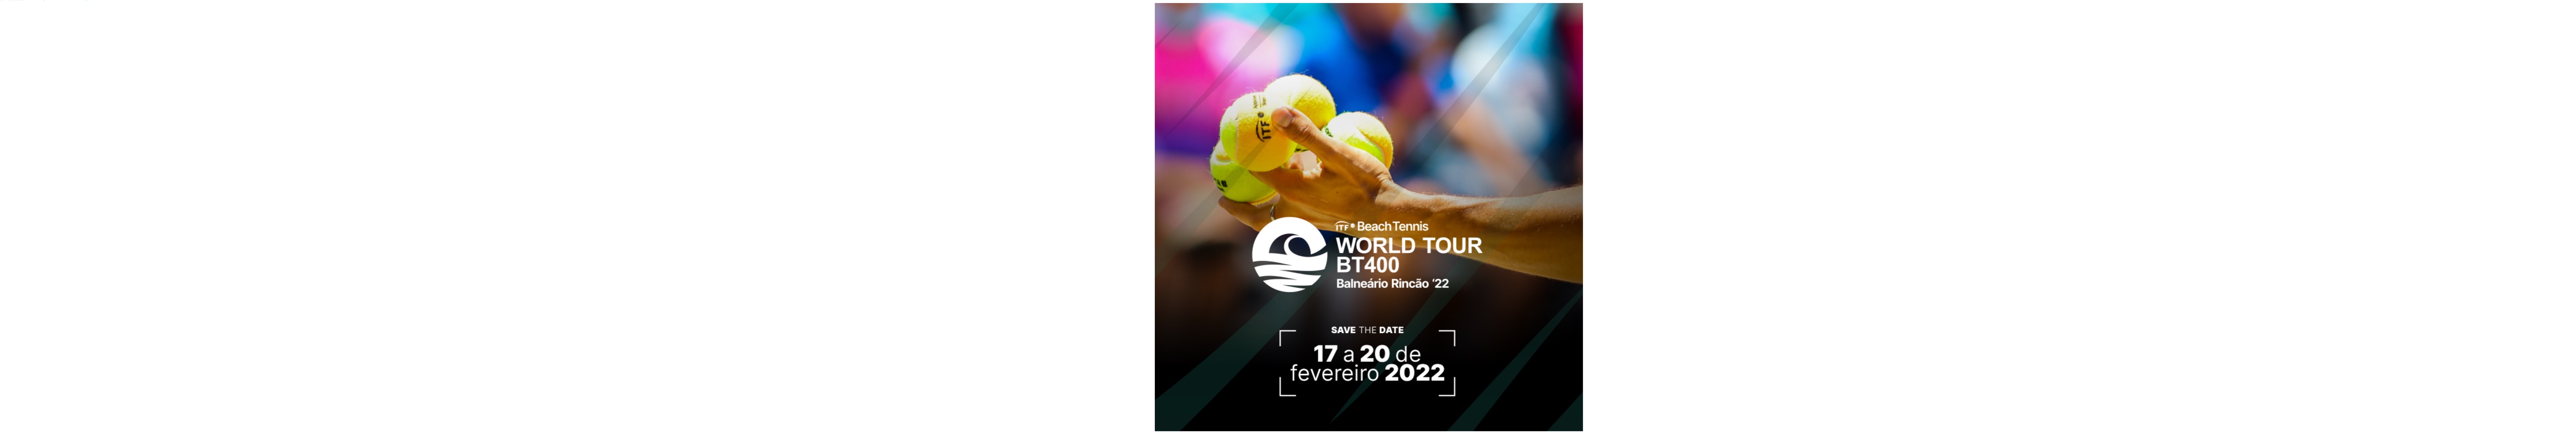 WORDL TOUR BT400, O MUNDIAL DE BEACH TENNIS